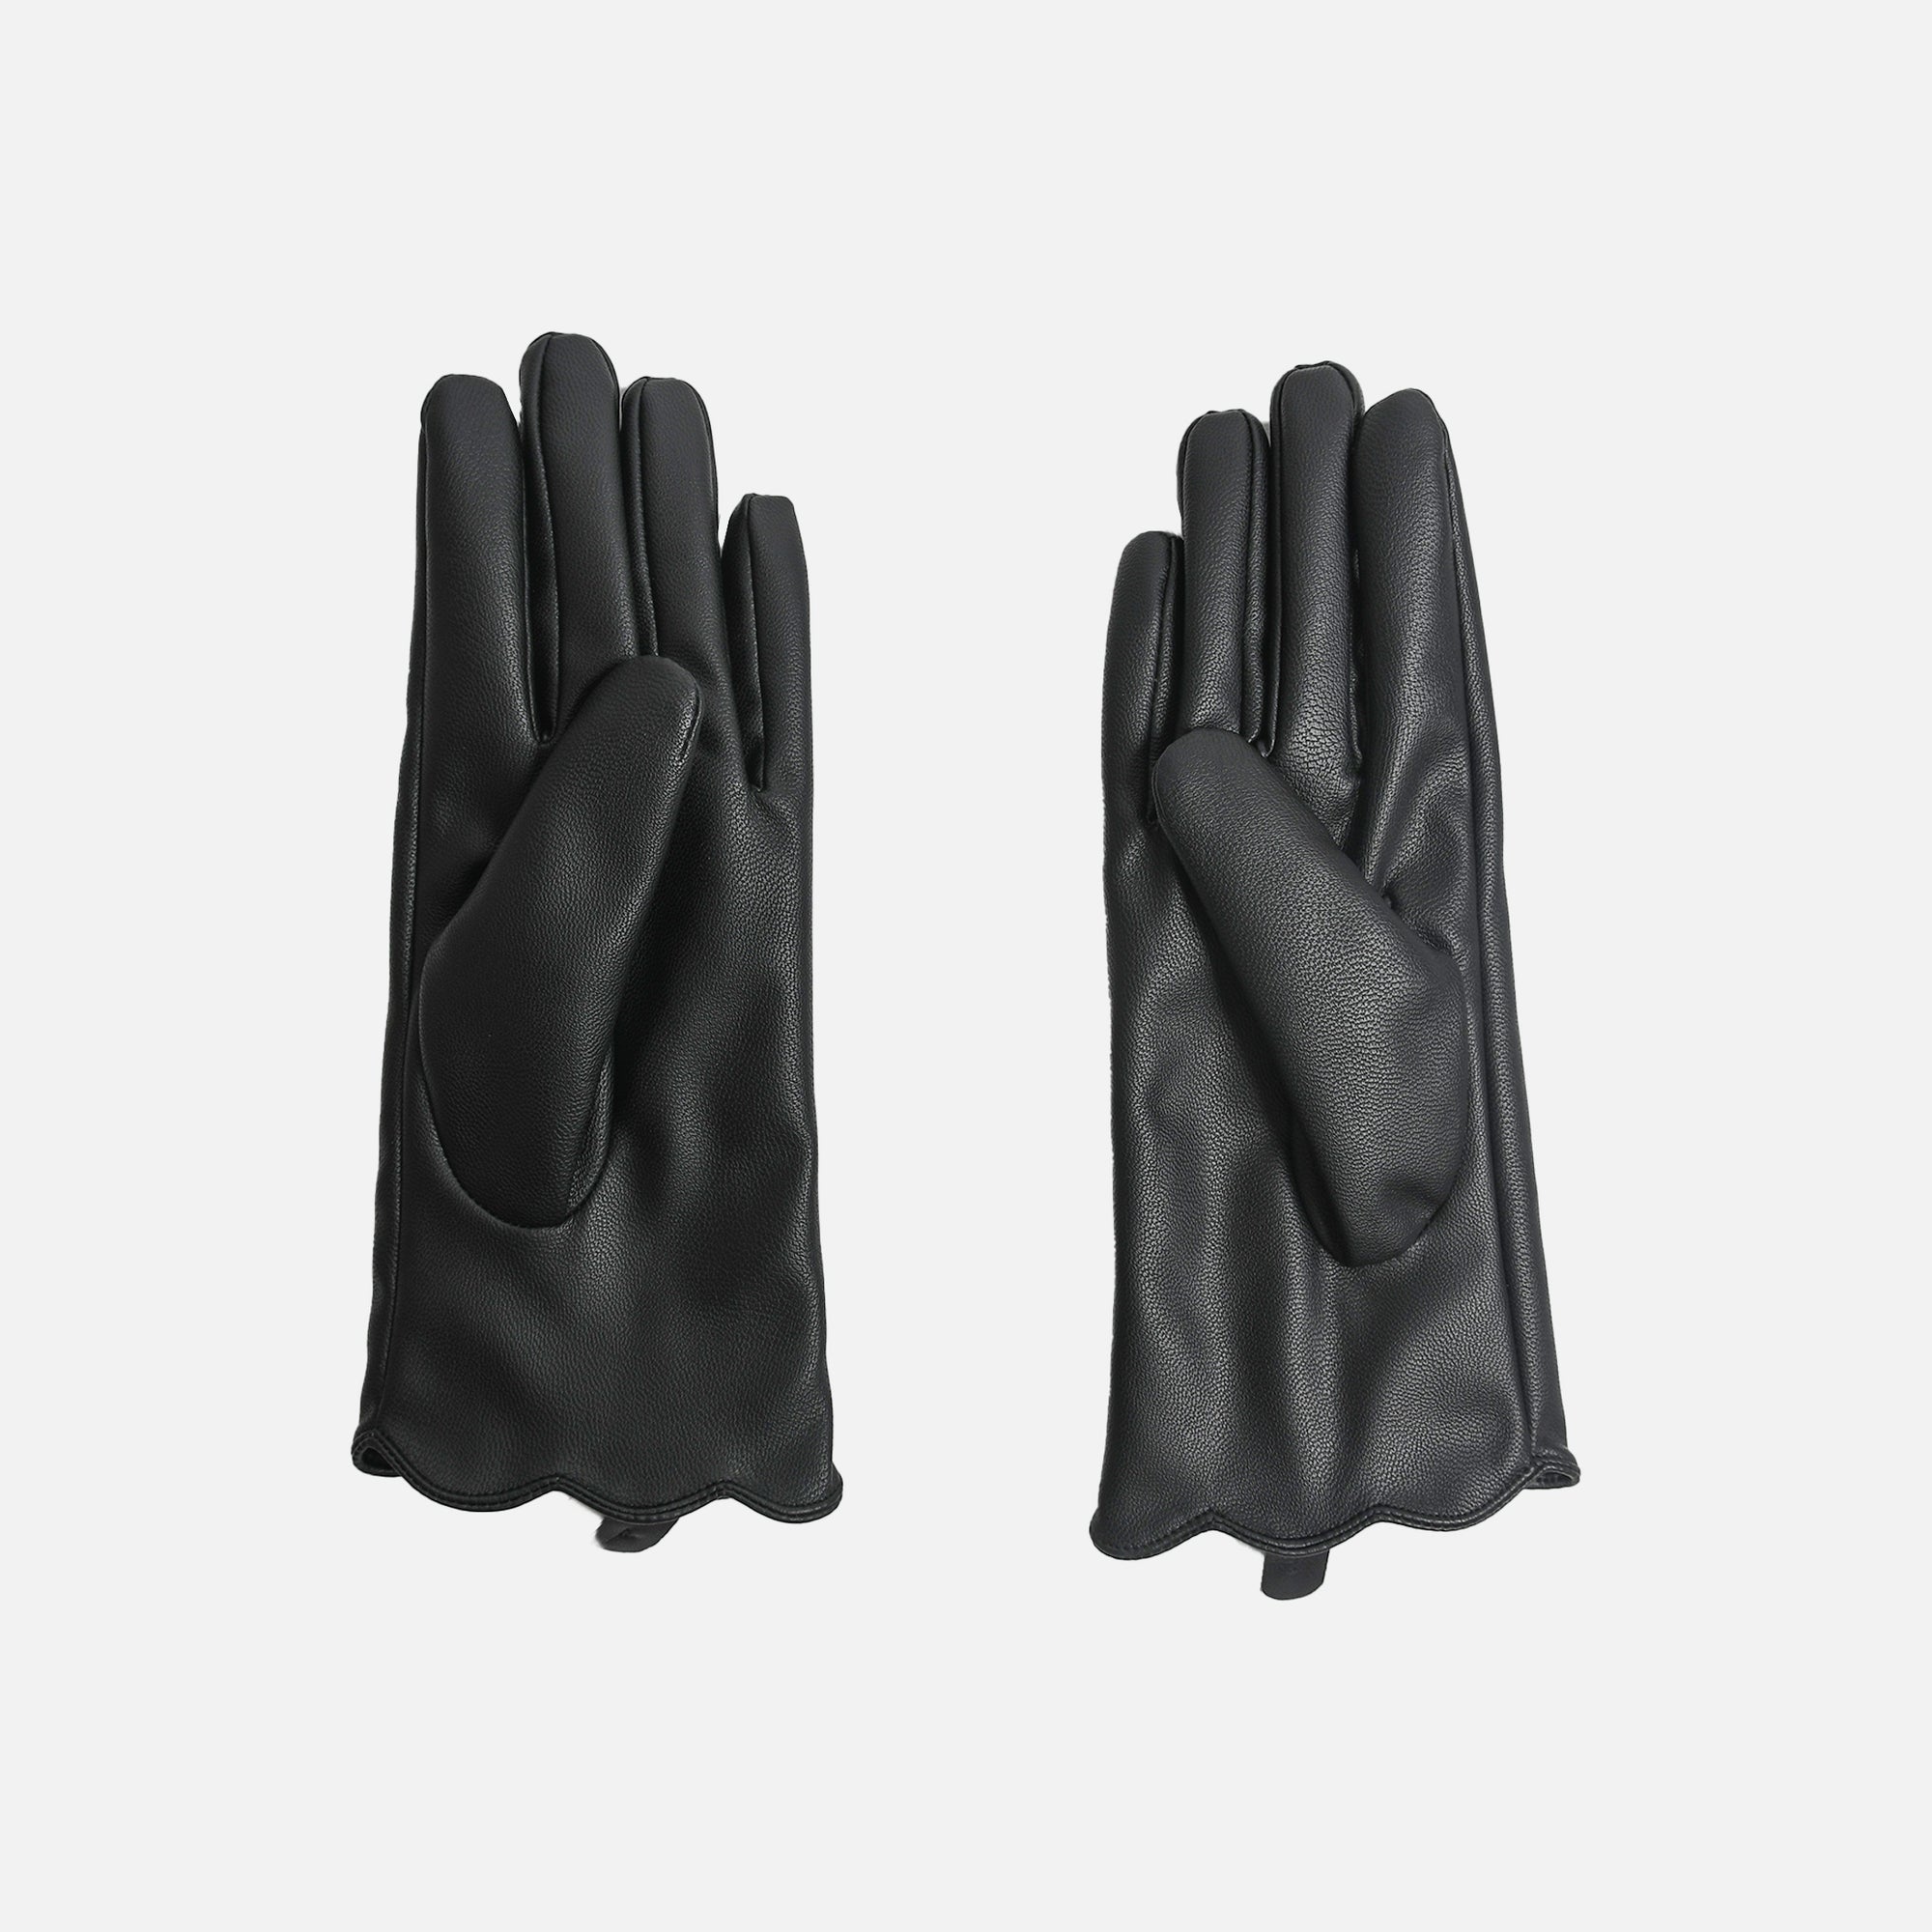 Gants tactiles noirs avec bord festonné – Bizou